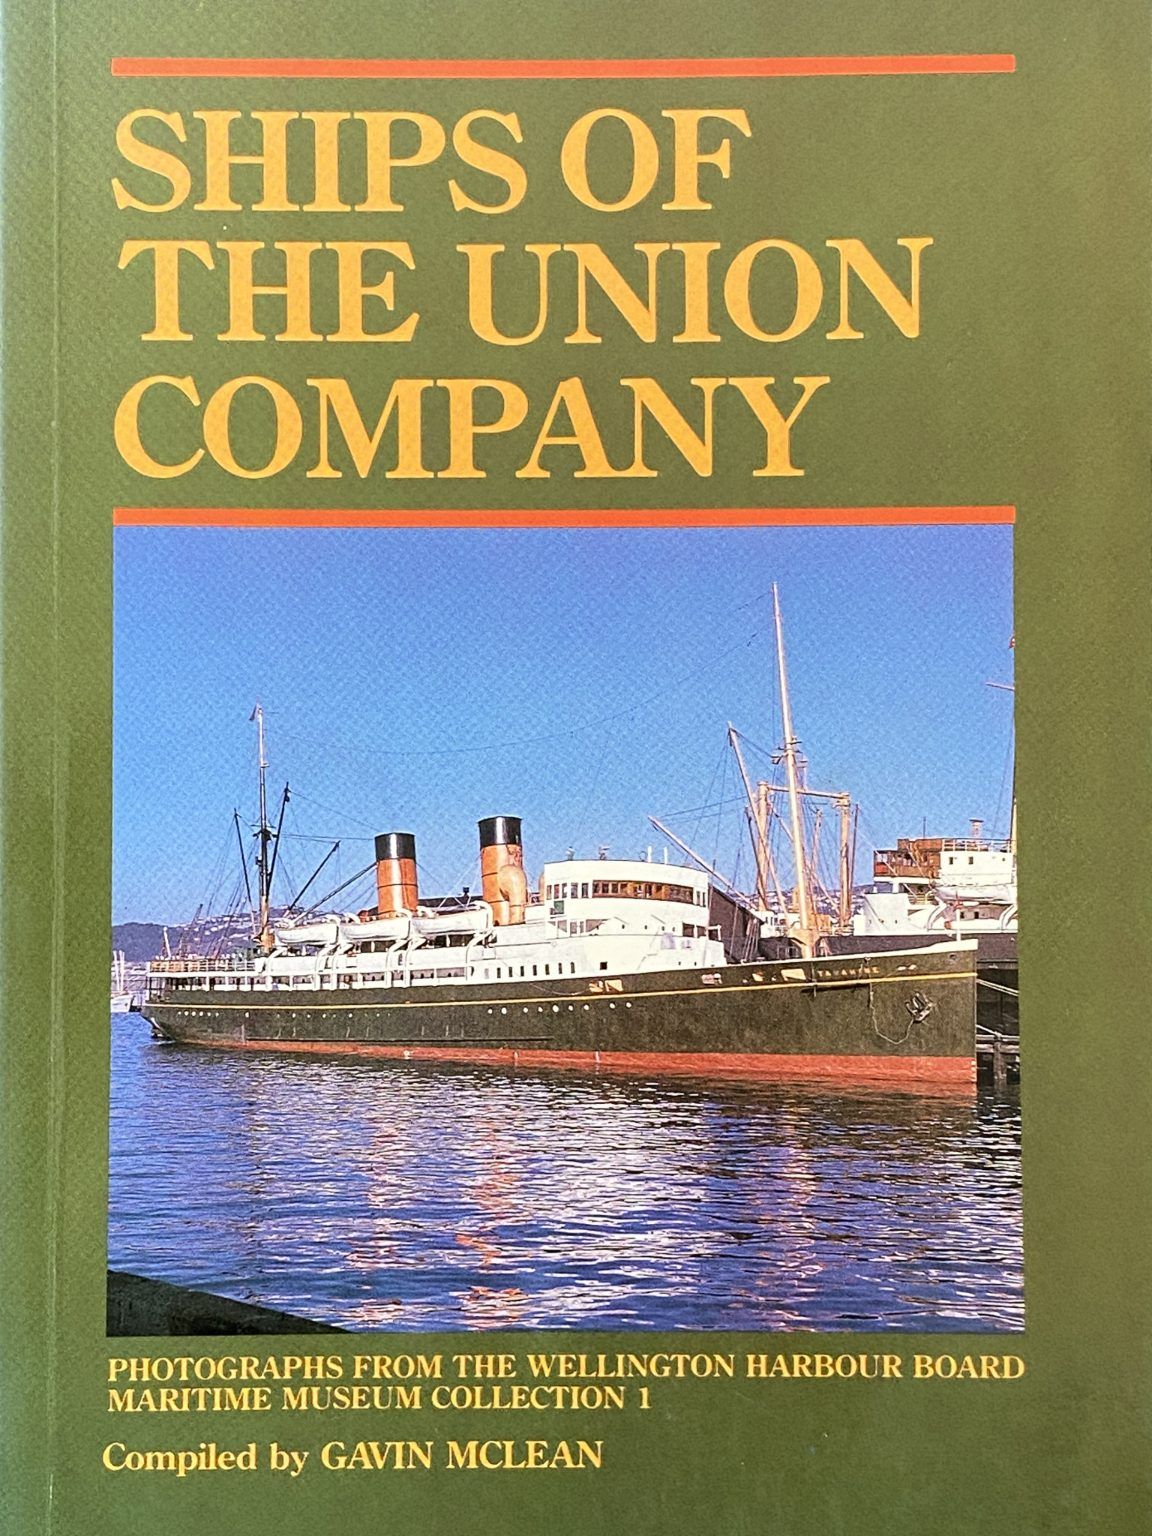 SHIPS OF THE UNION COMPANY